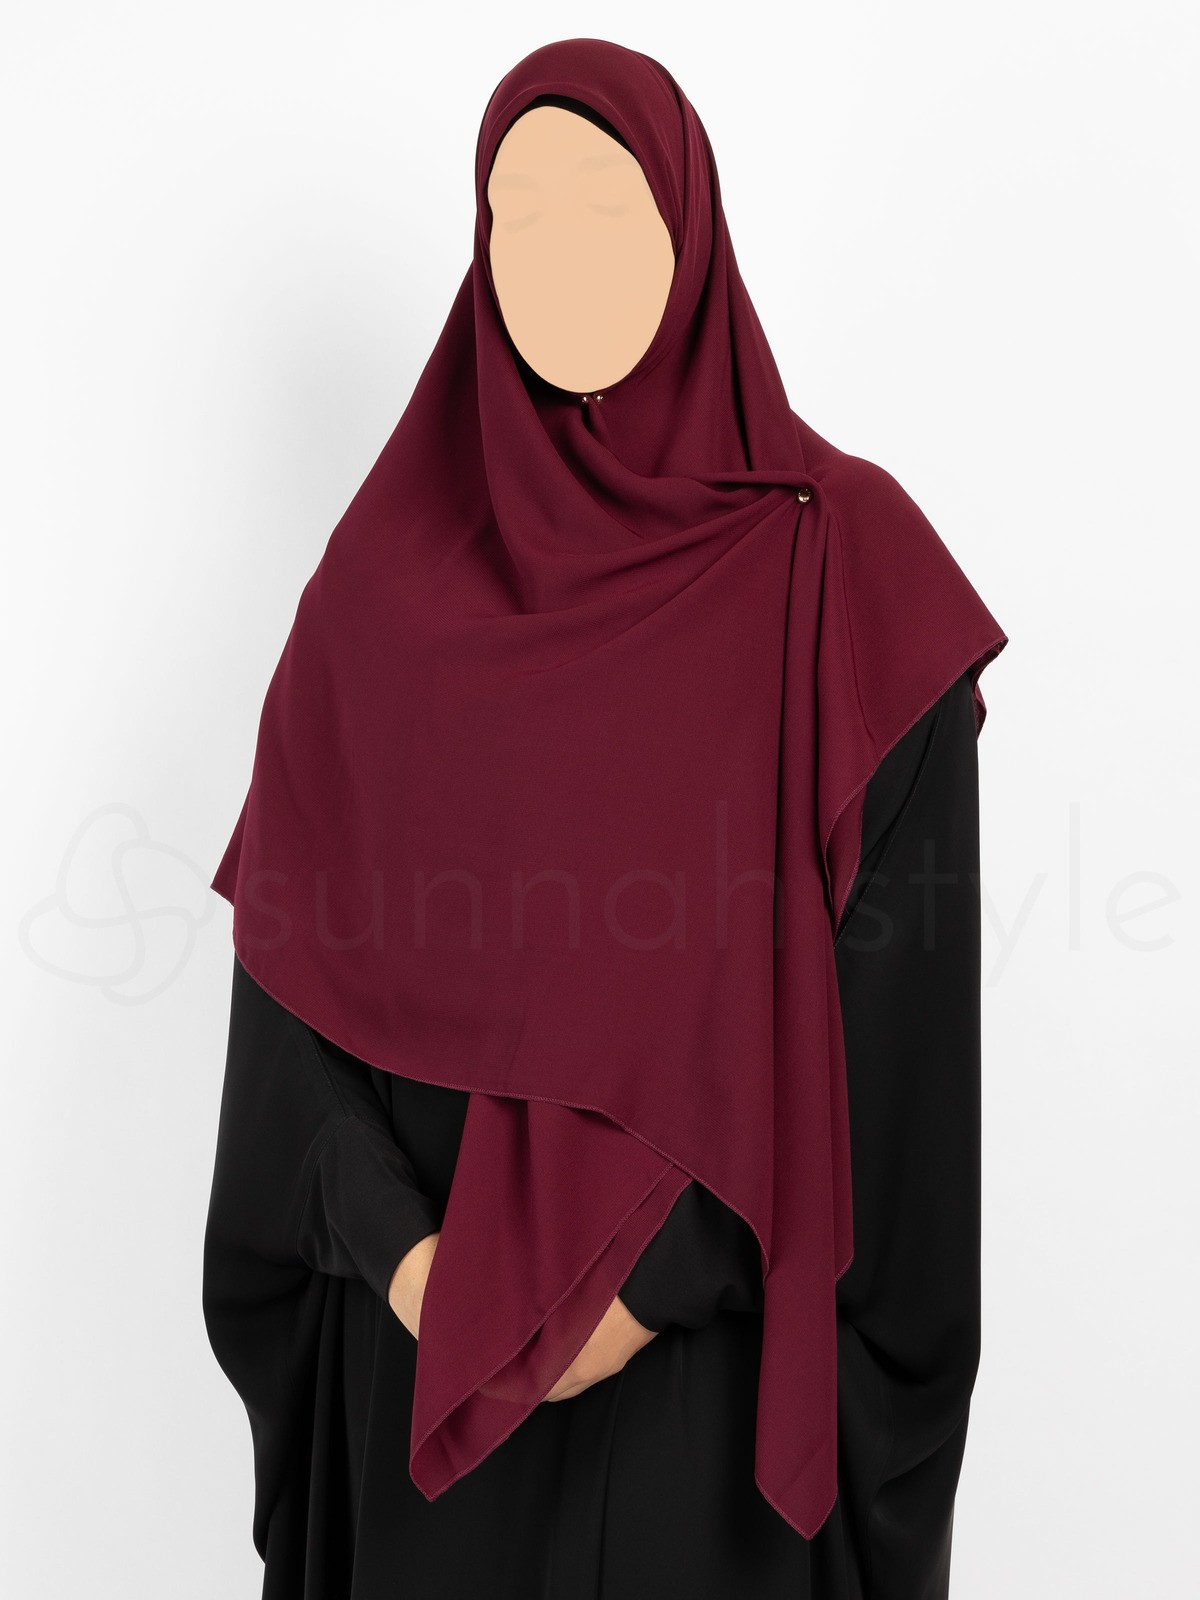 Sunnah Style - Essentials Square Hijab (Premium Chiffon) - Large (Burgundy)